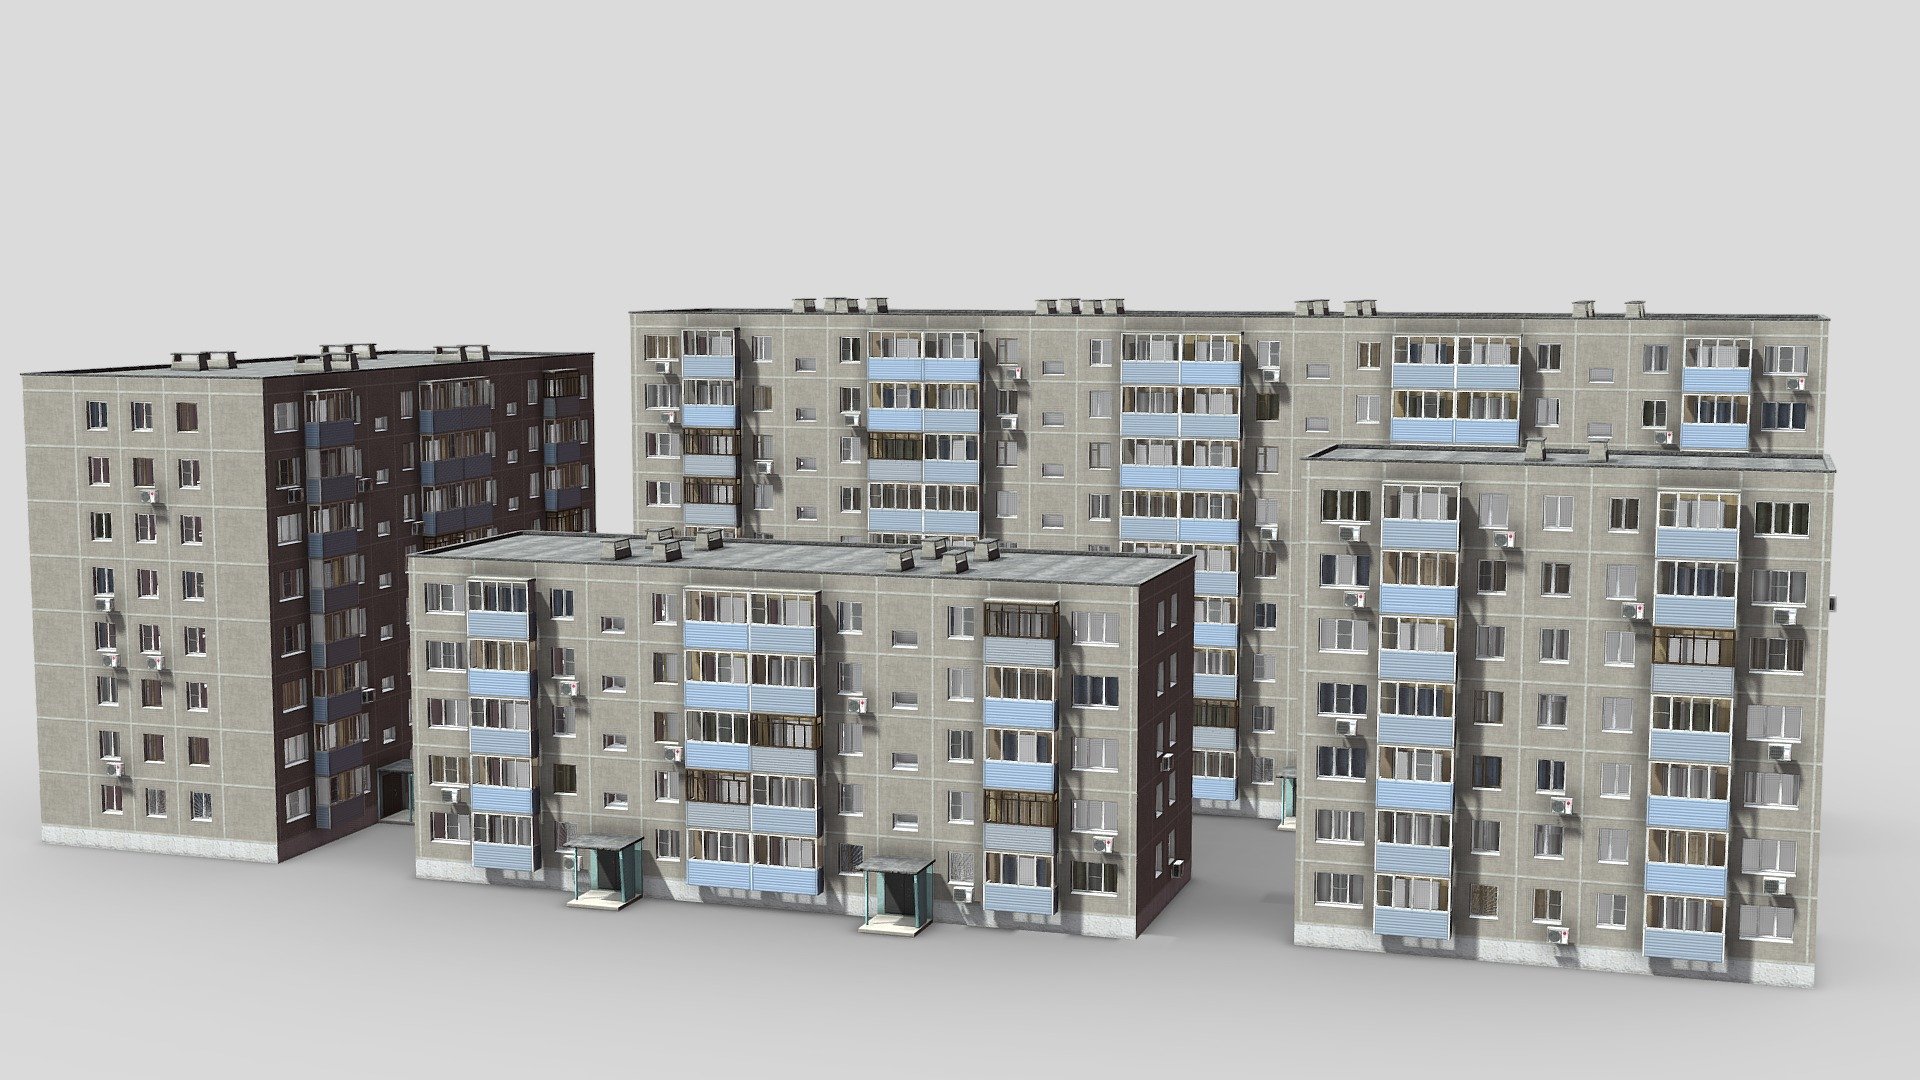 Procedural Soviet Building Generator
https://youtu.be/EWNByqUu57w
made in Blender - Procedural Soviet Building Generator - 3D model by BeyondDigital 3d model